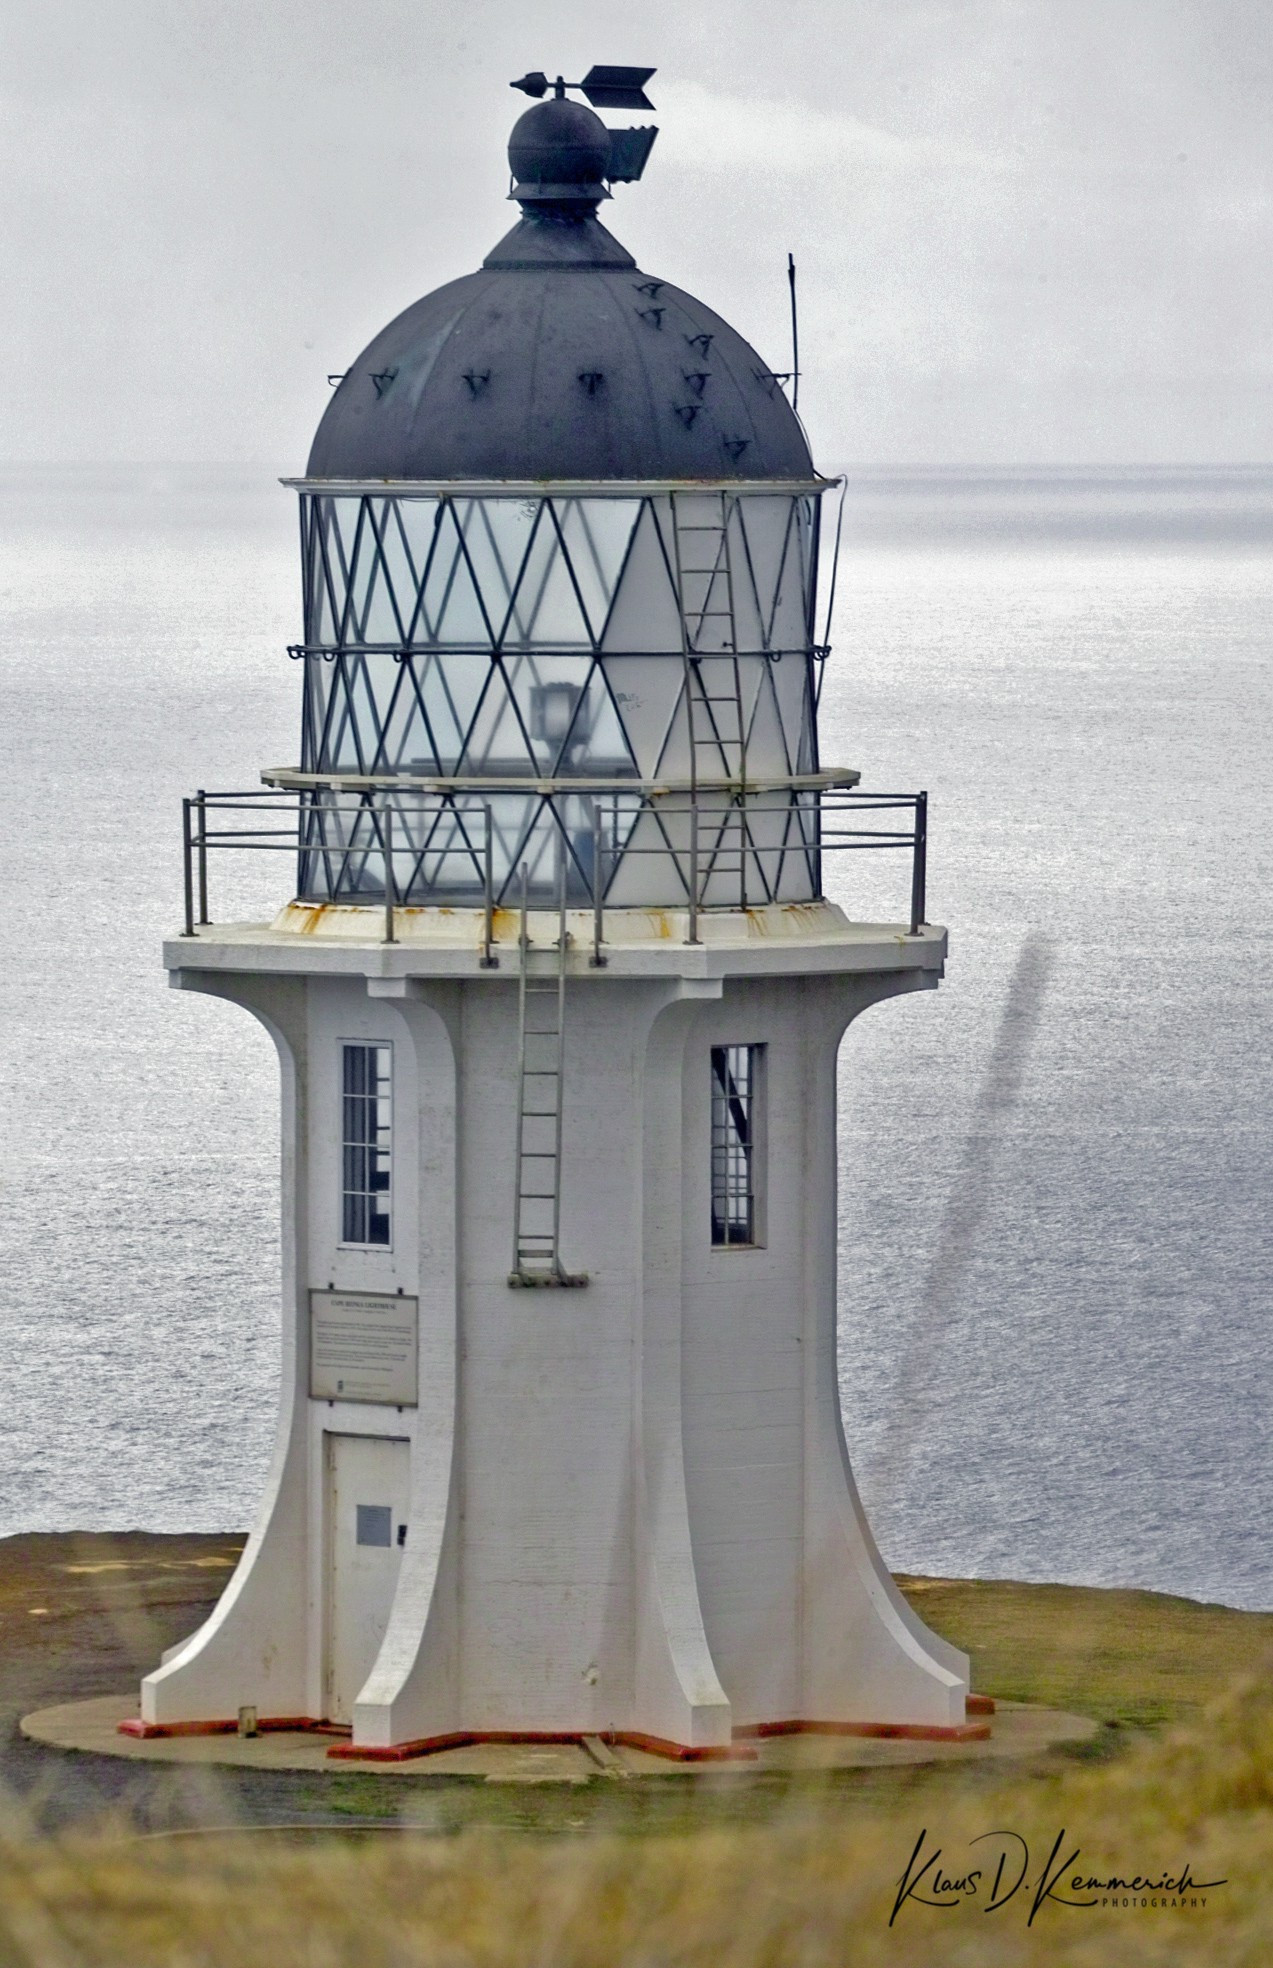 Cape Reinga Lighthouse, Новая Зеландия